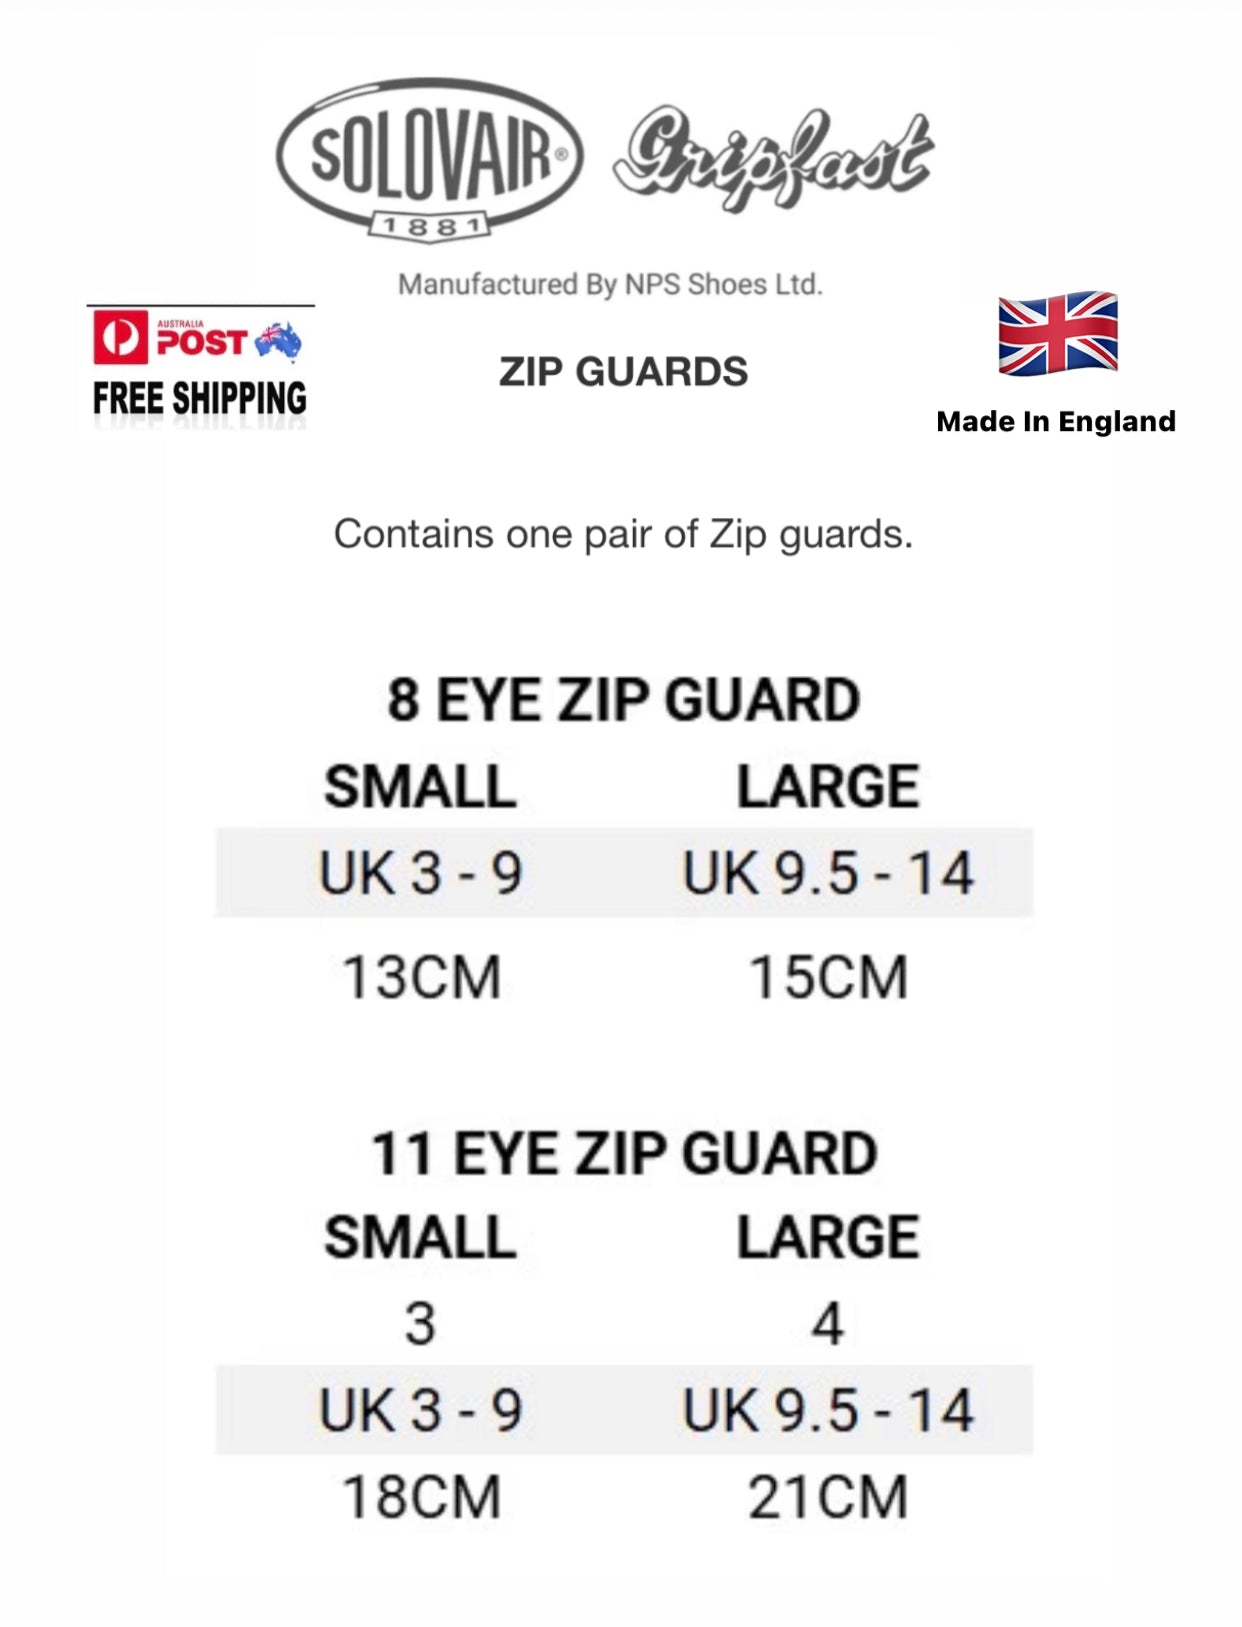 Solovair Gripfast 11 Eye Zip Guard Black Greasy Made In England